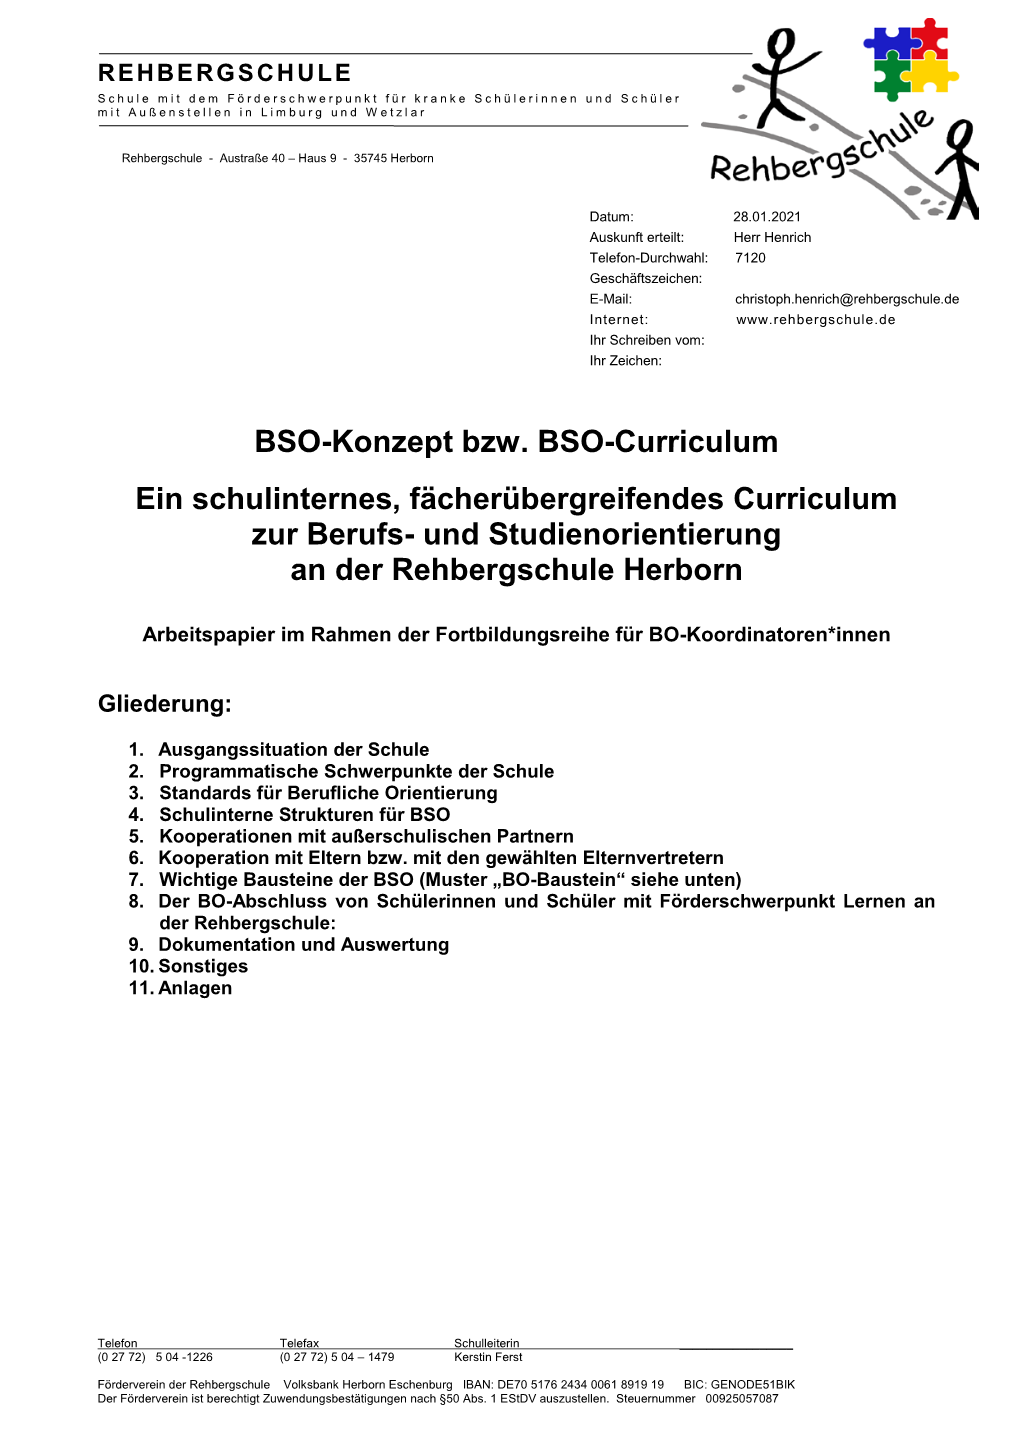 BSO Curriculum Rehbergschule Herborn